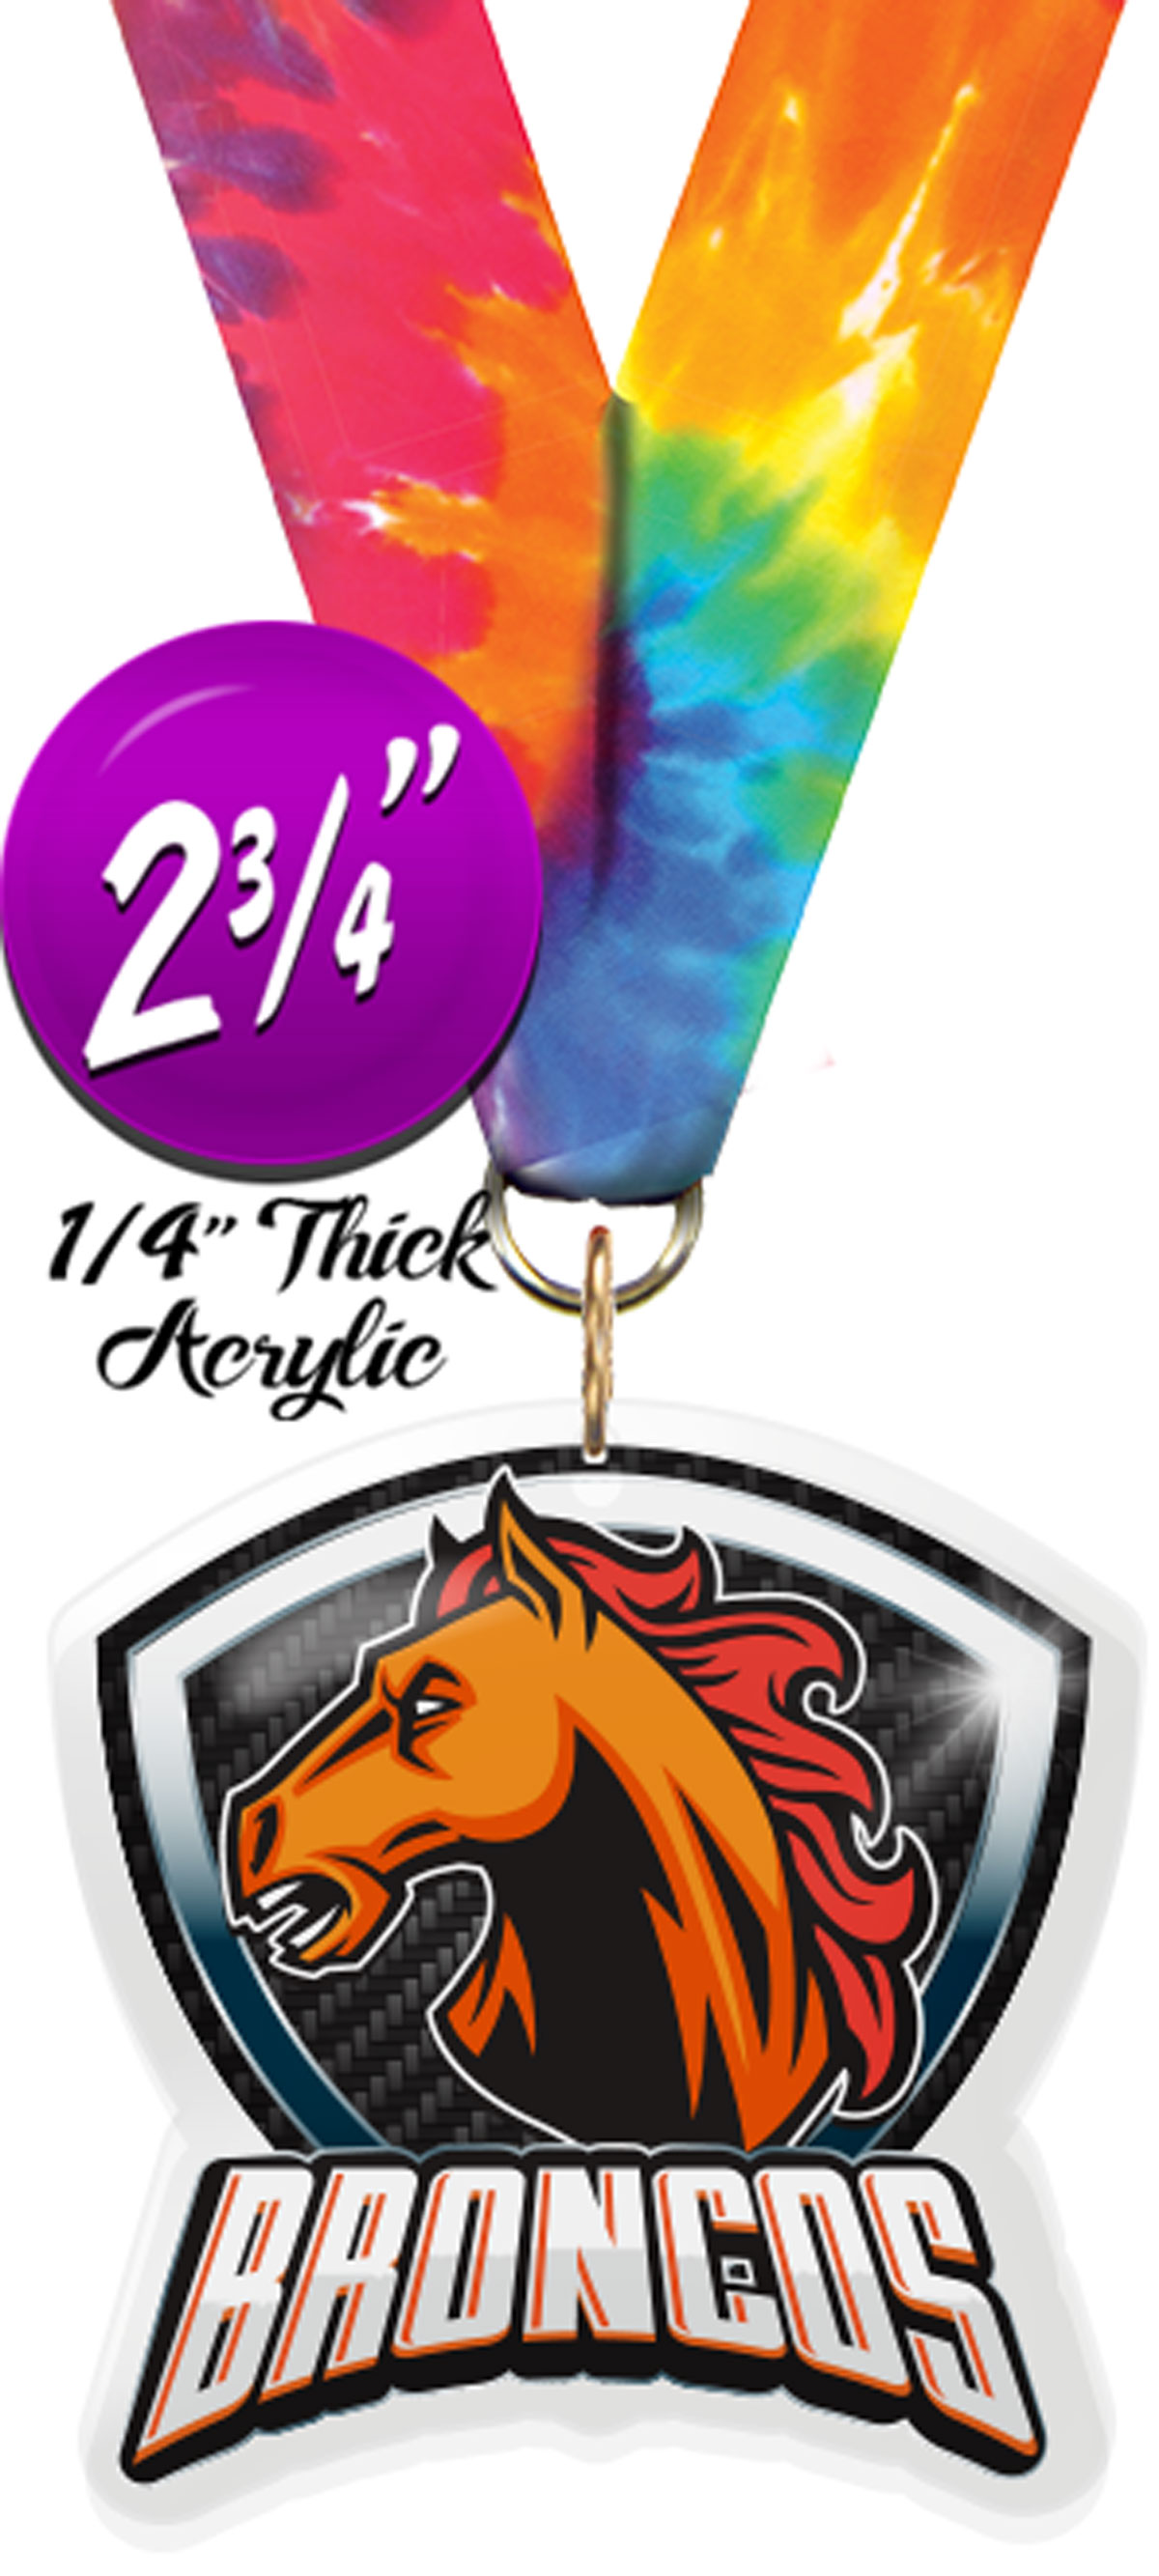 Bronco Mascot Shield Colorix Acrylic Medal